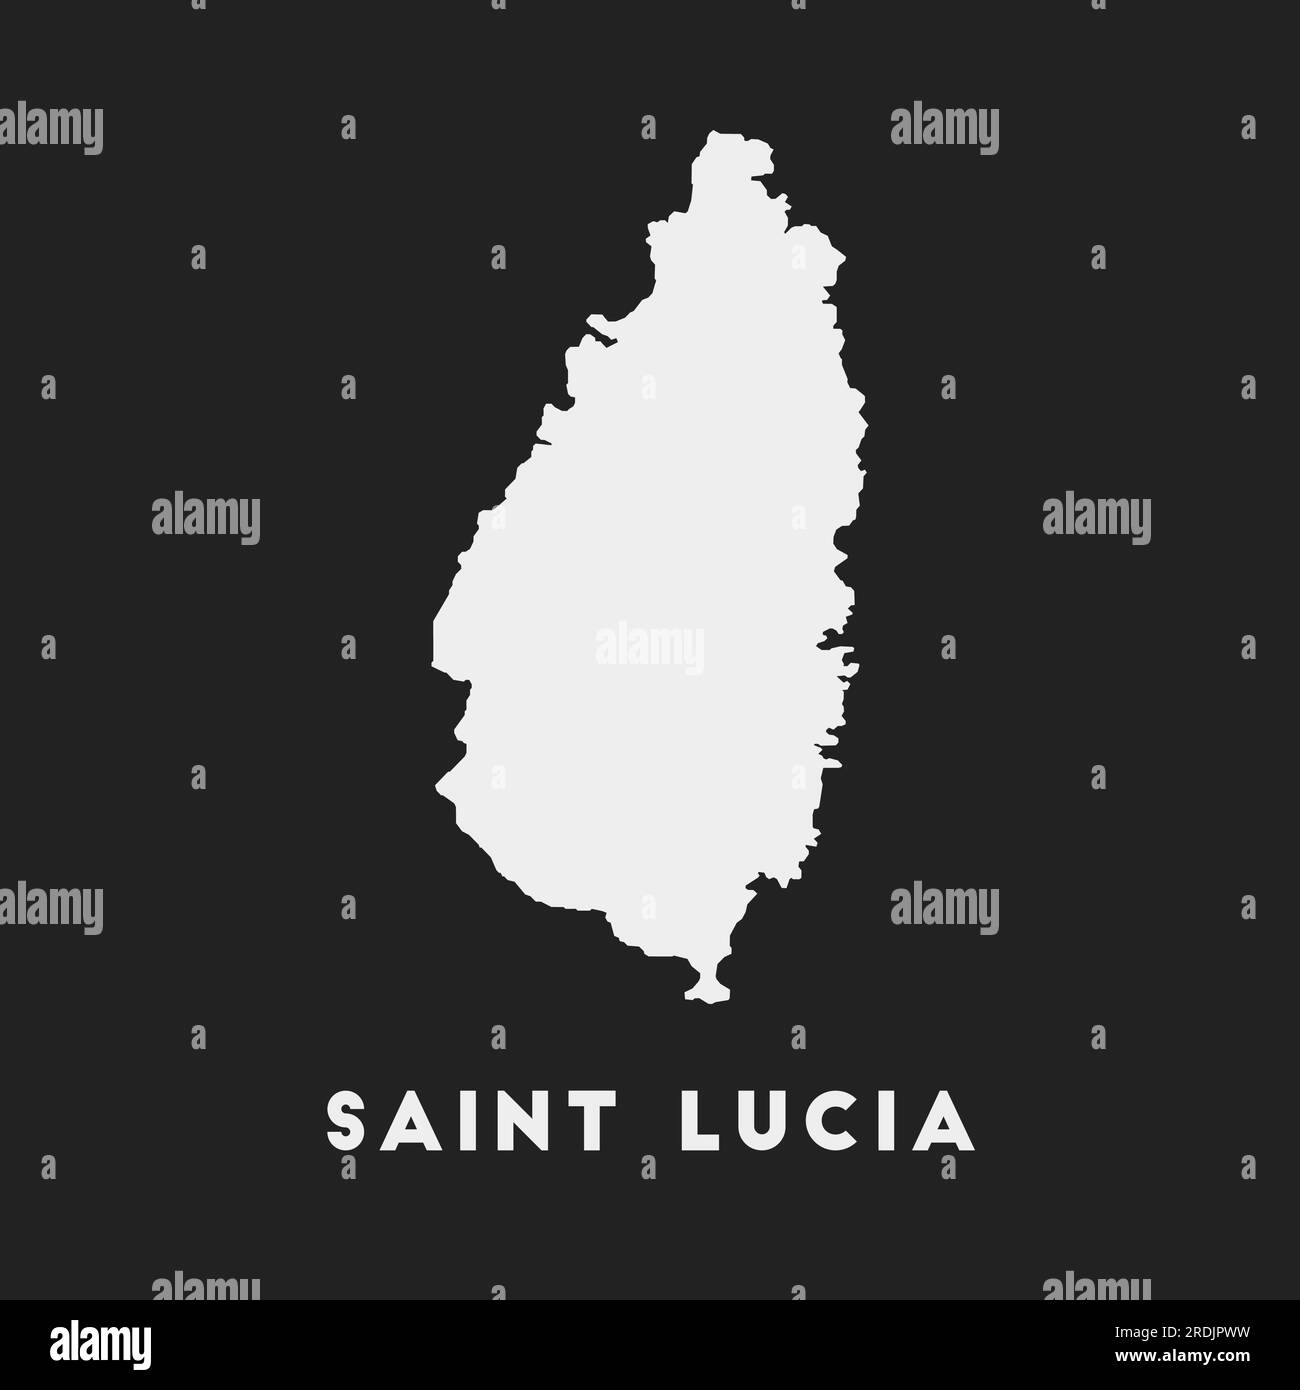 Saint Lucia icon. Island map on dark background. Stylish Saint Lucia ...